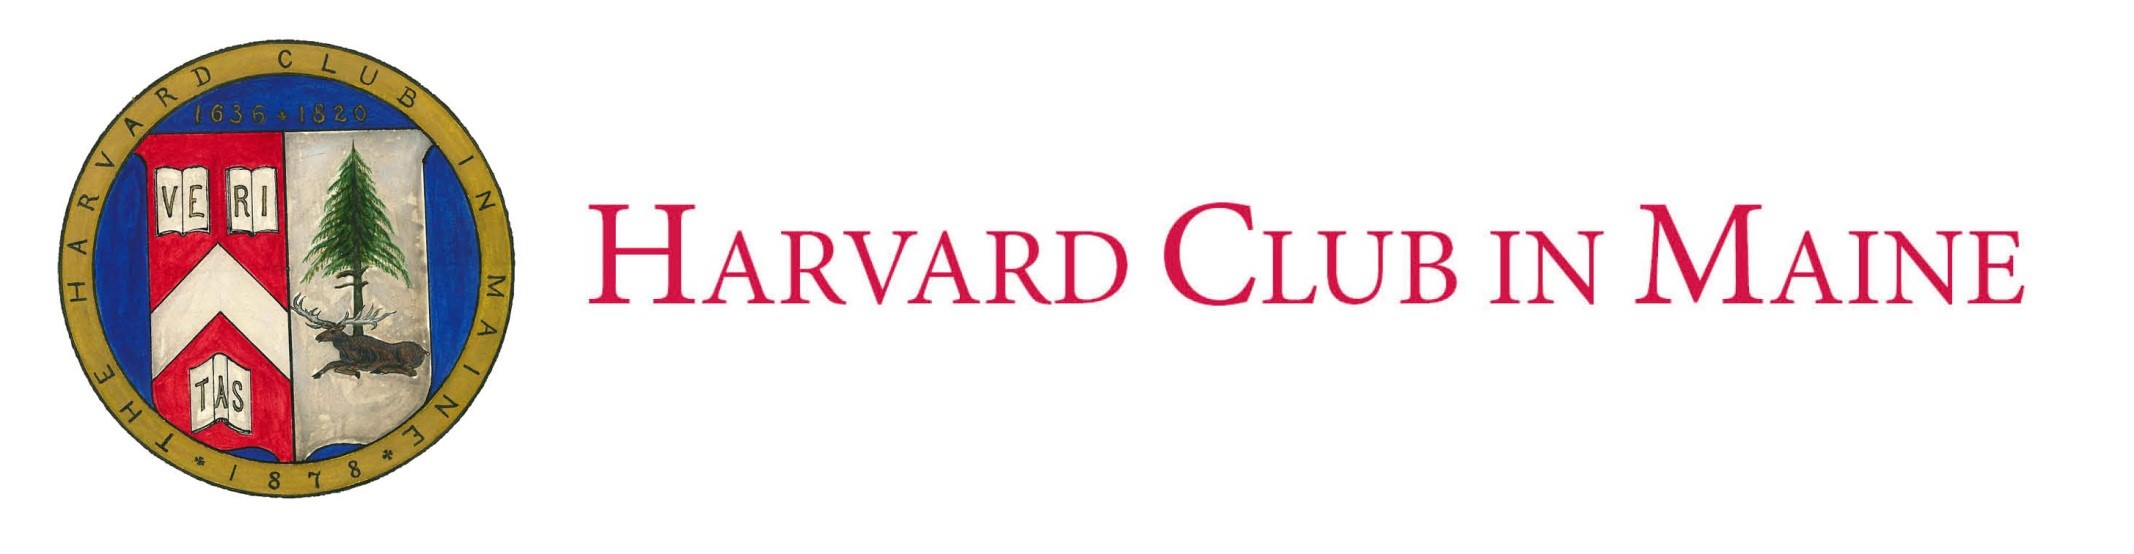 Harvard Club in Maine logo